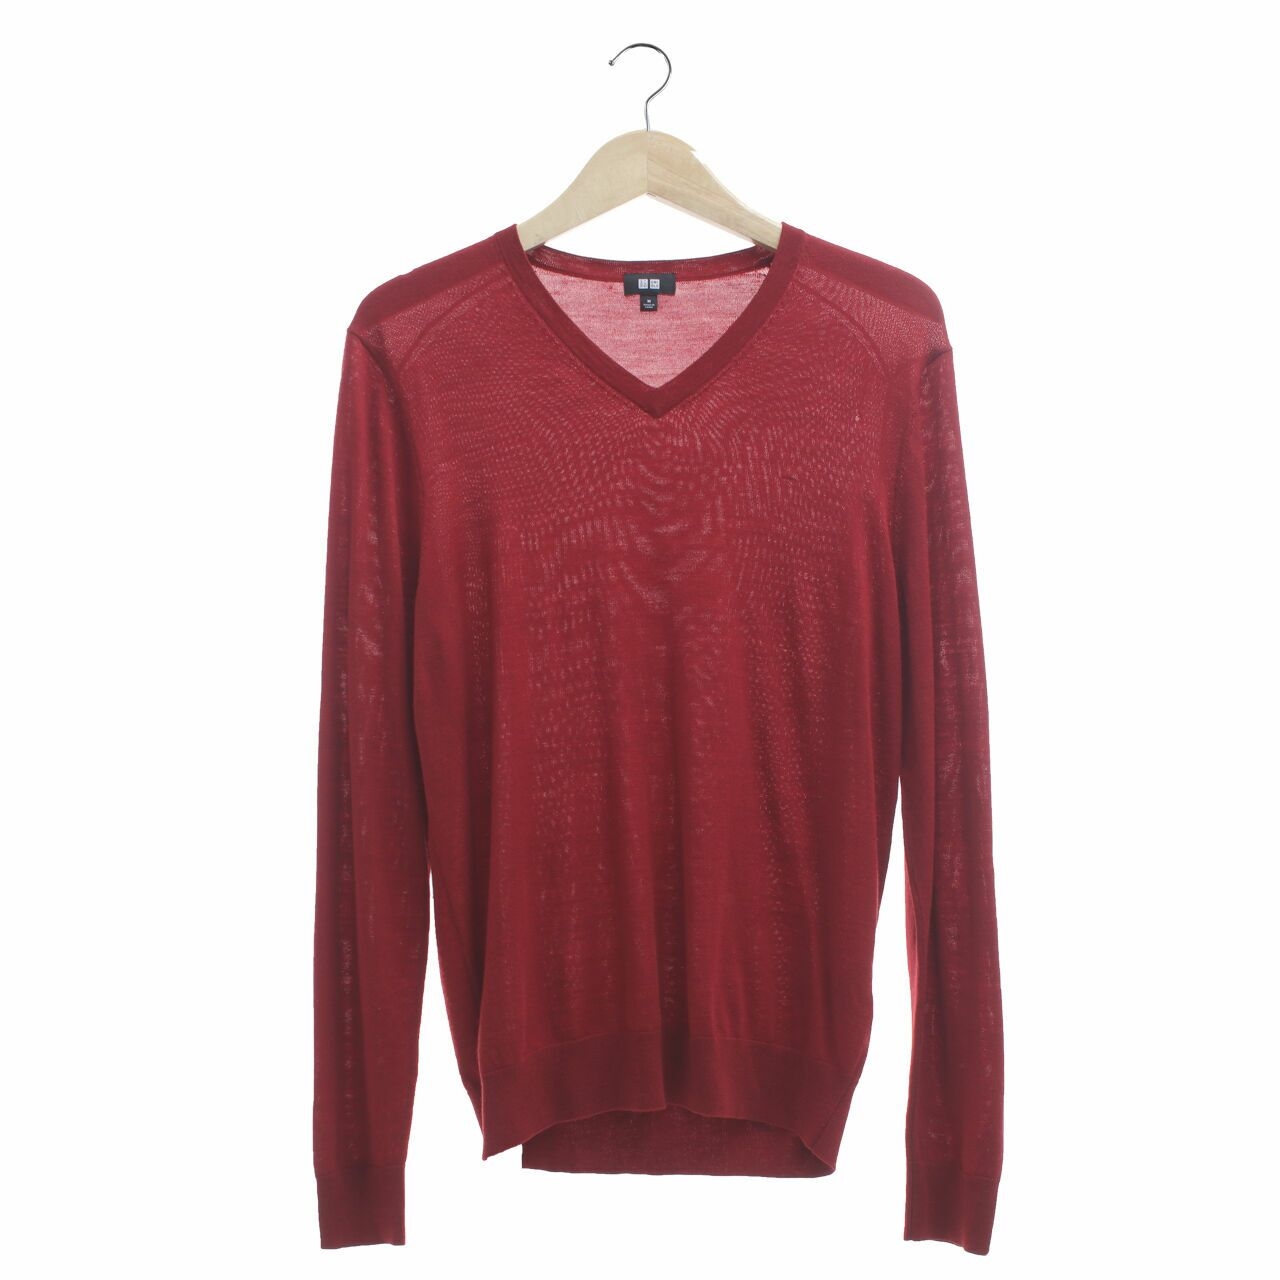 UNIQLO Red Knit Sweater